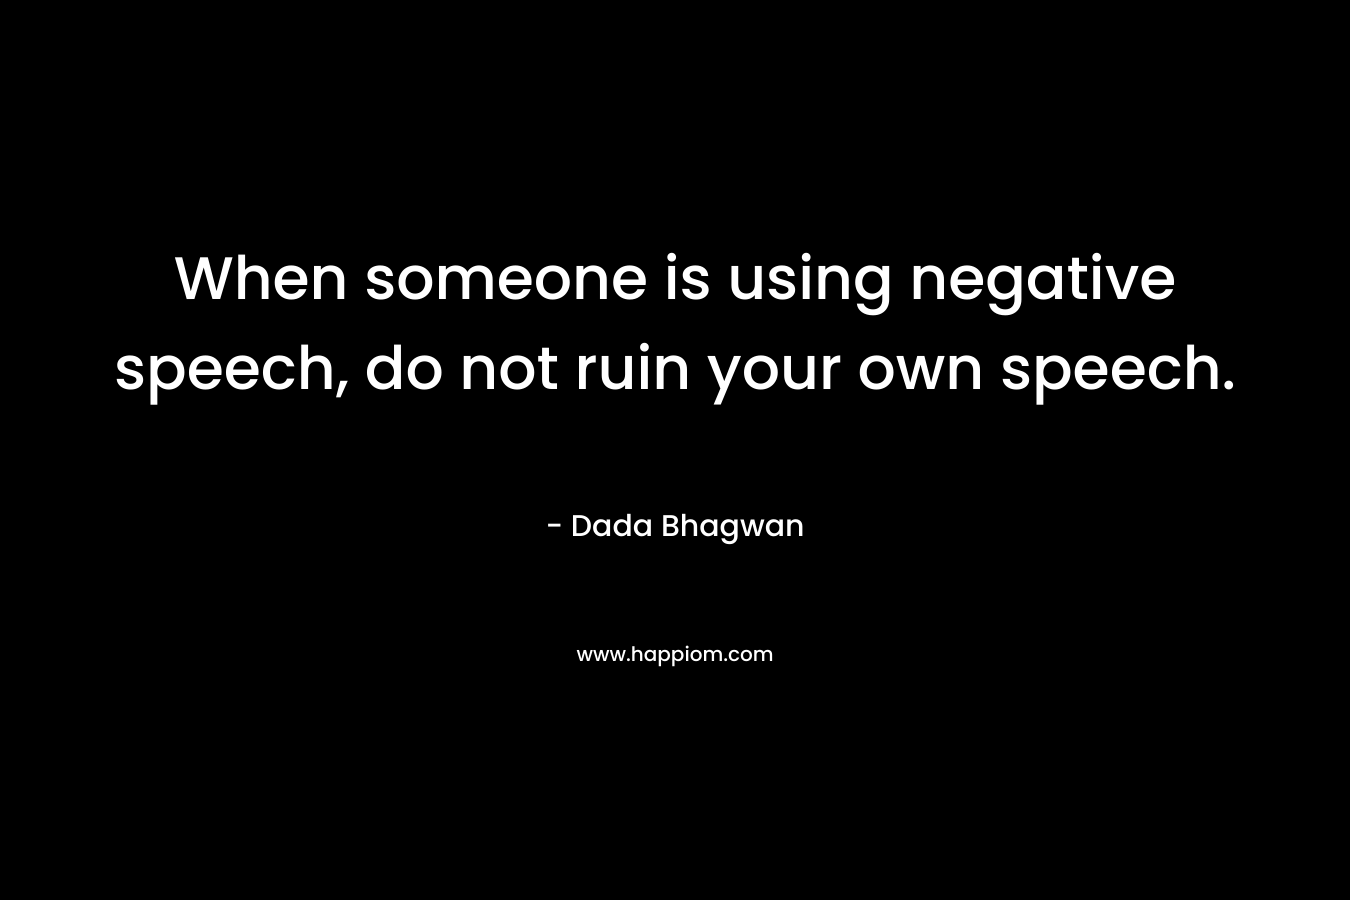 When someone is using negative speech, do not ruin your own speech.